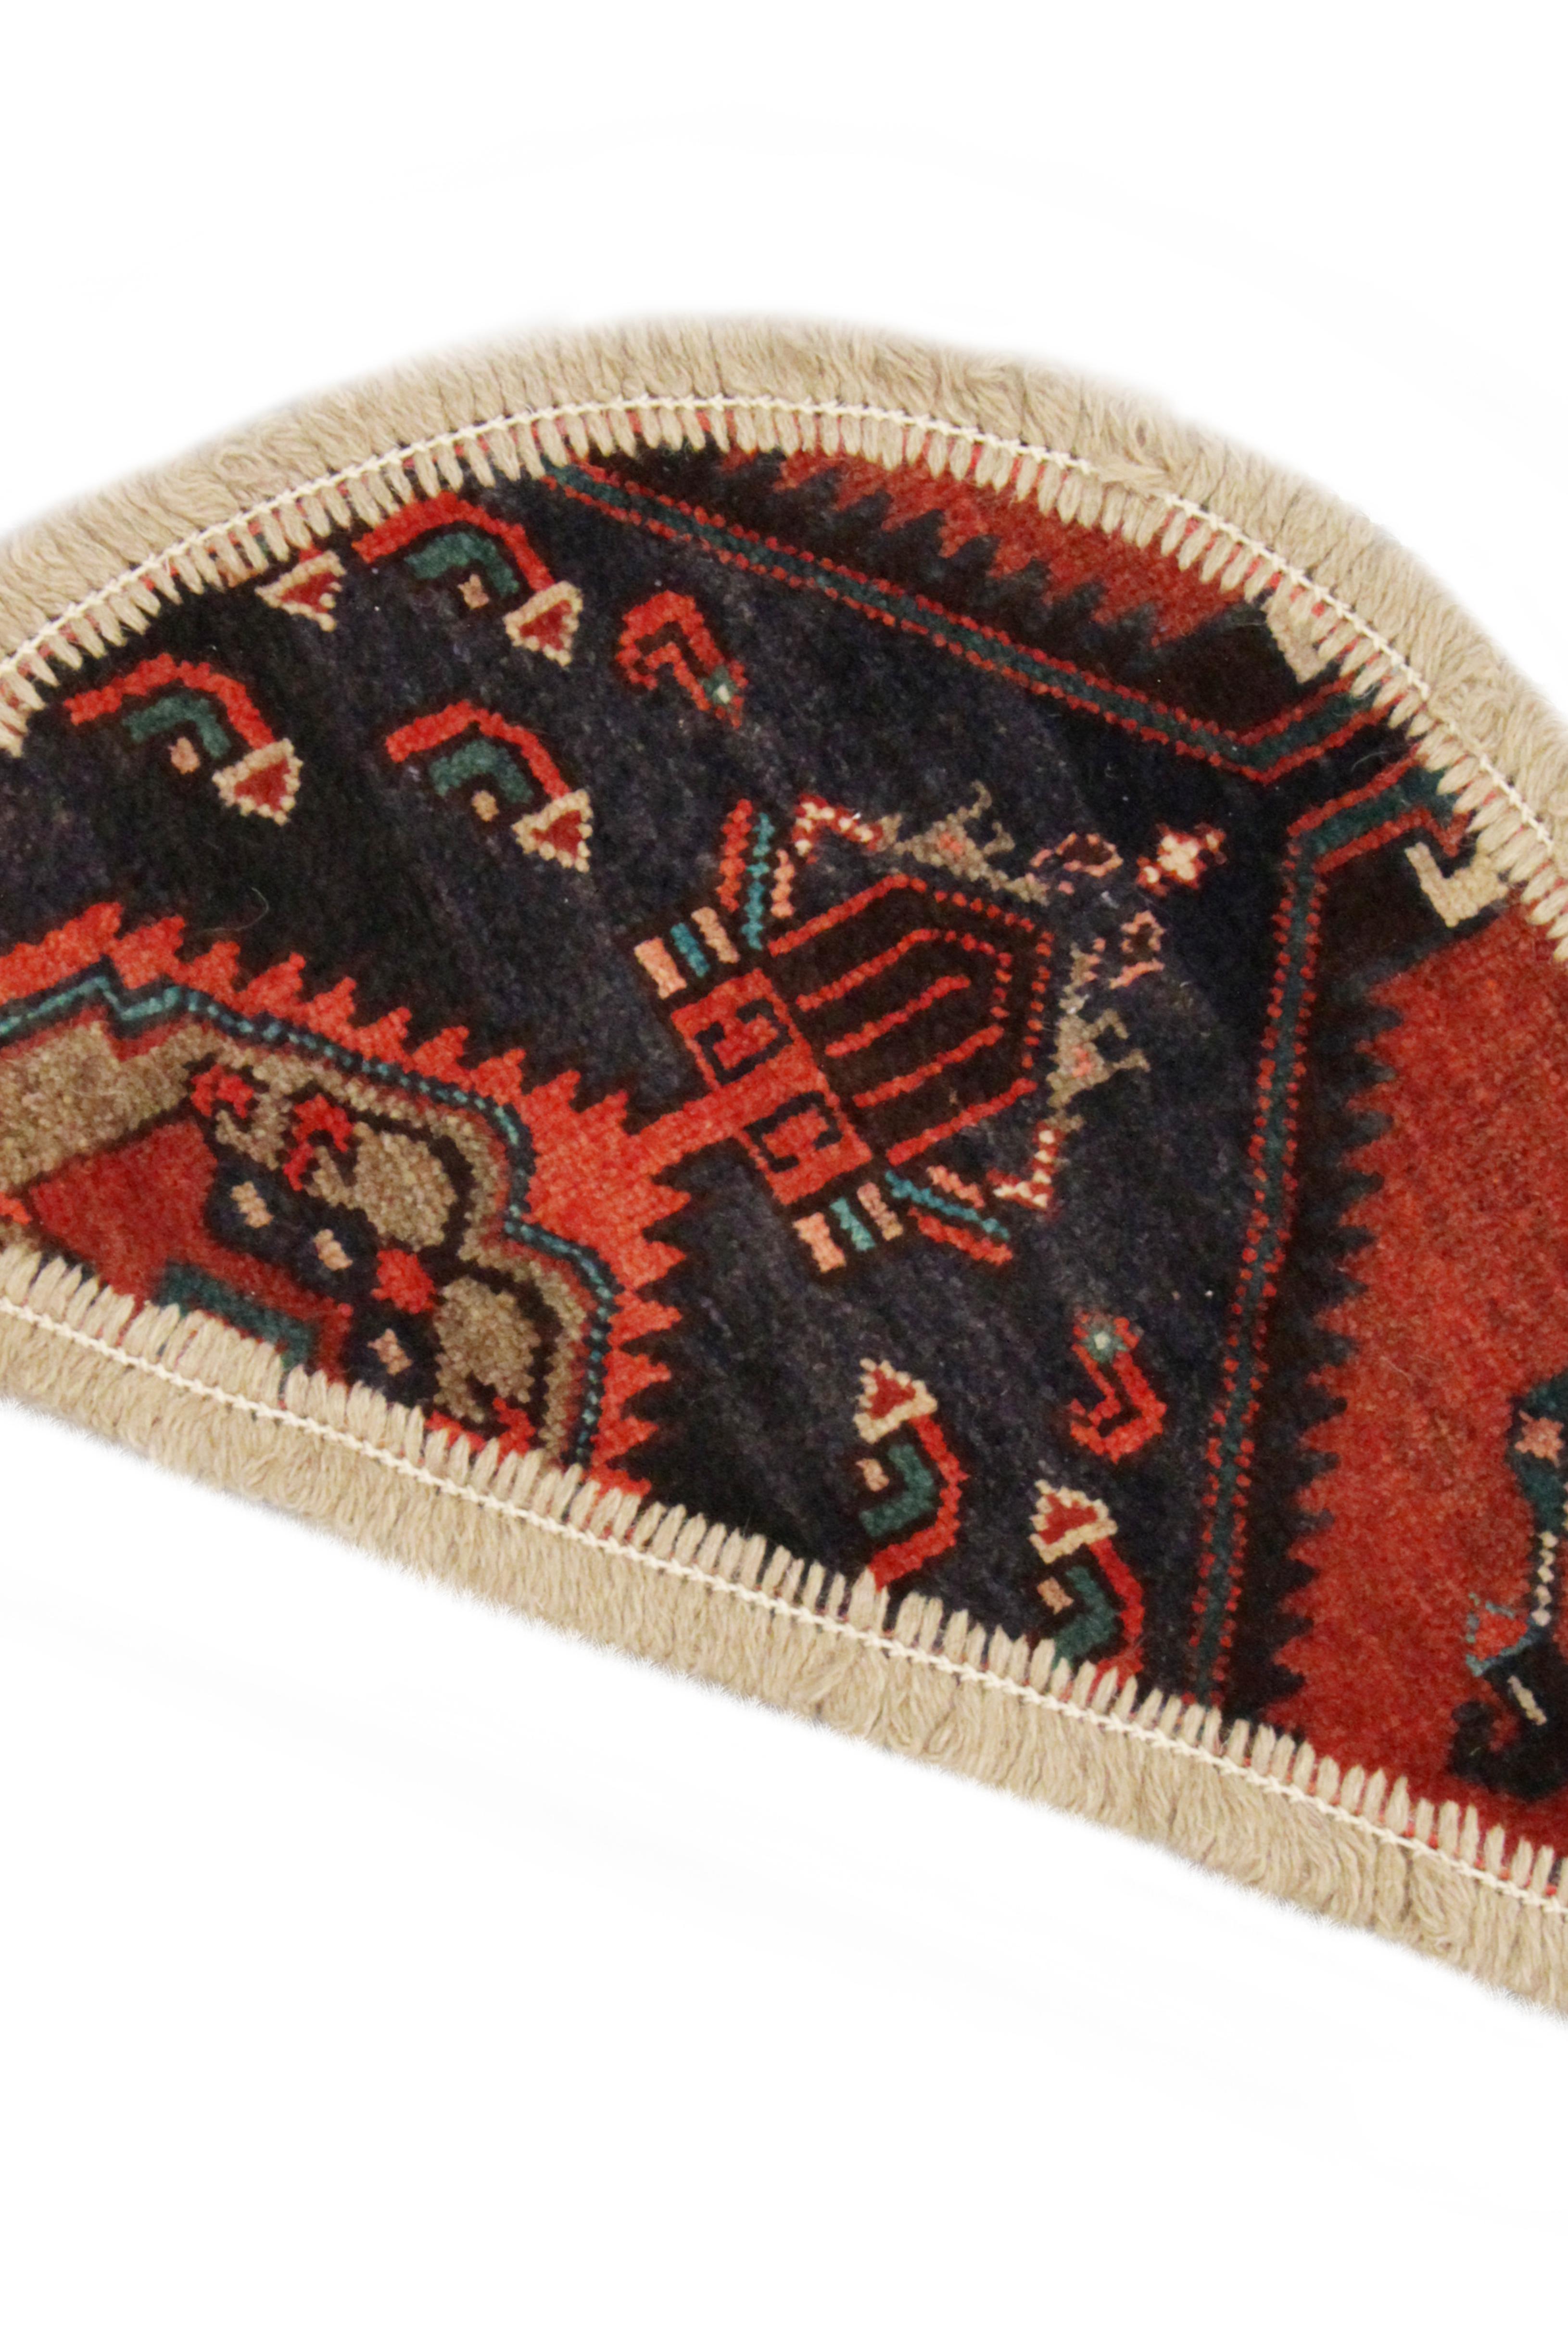 Rustic Oriental Rug Semicircle for Interior Door Way- Entrance way Handmade Carpet Mat